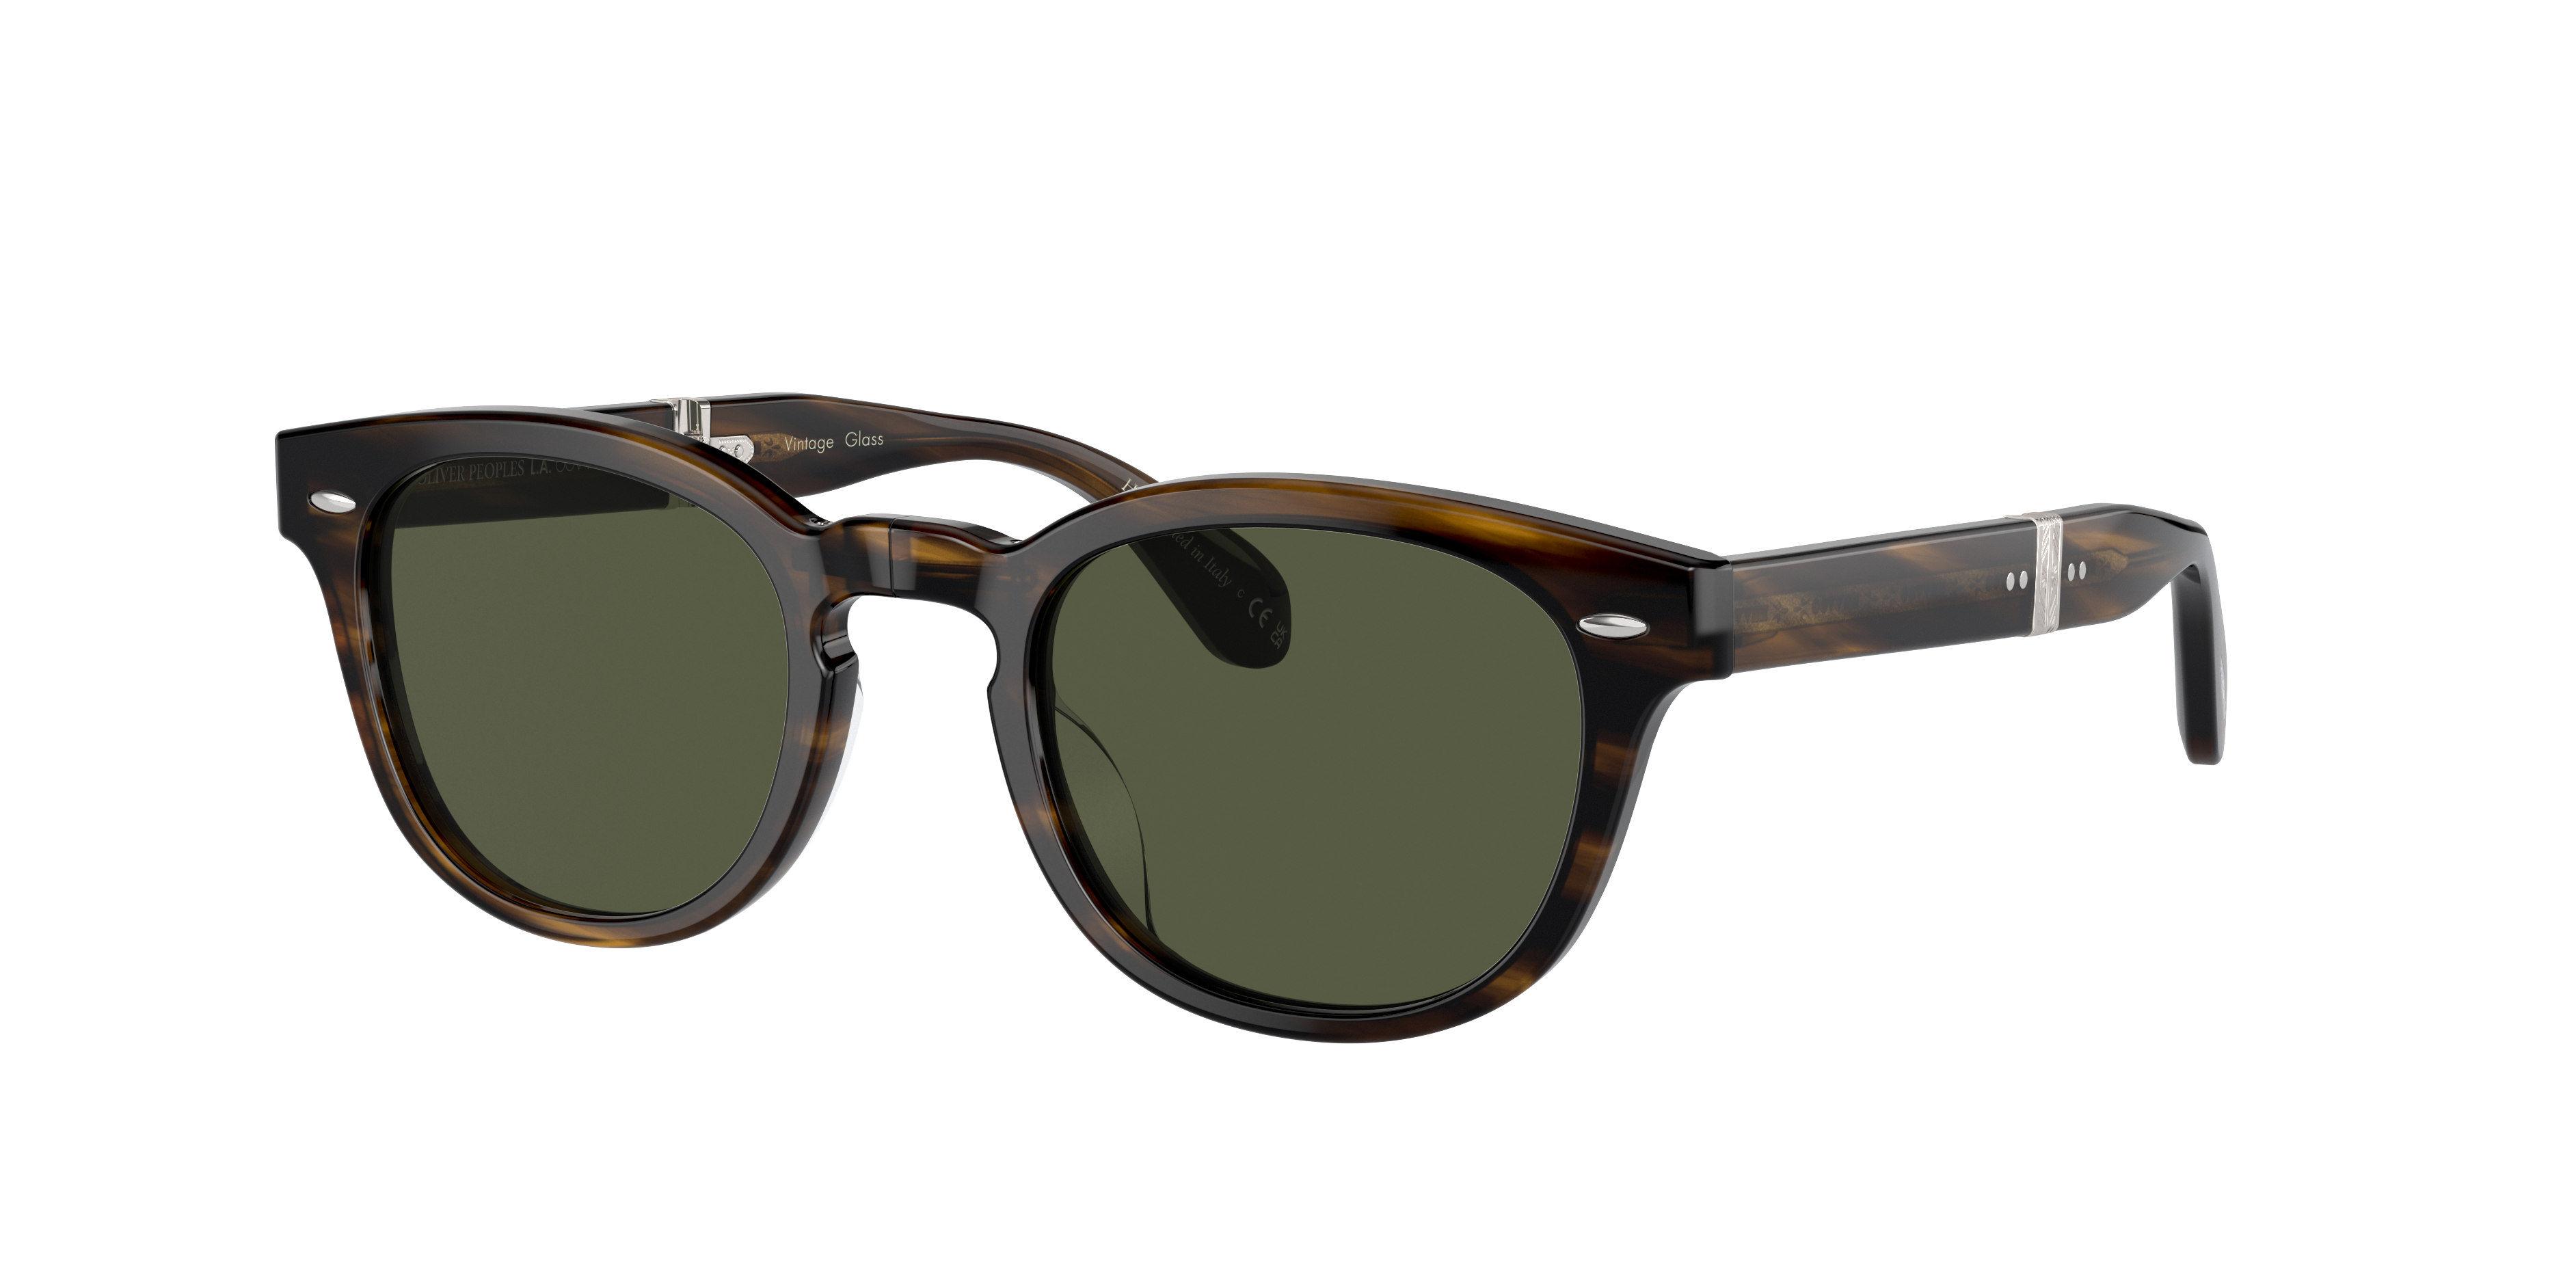 Oliver Sheldrake 1950 Sunglasses in Bark | Oliver®